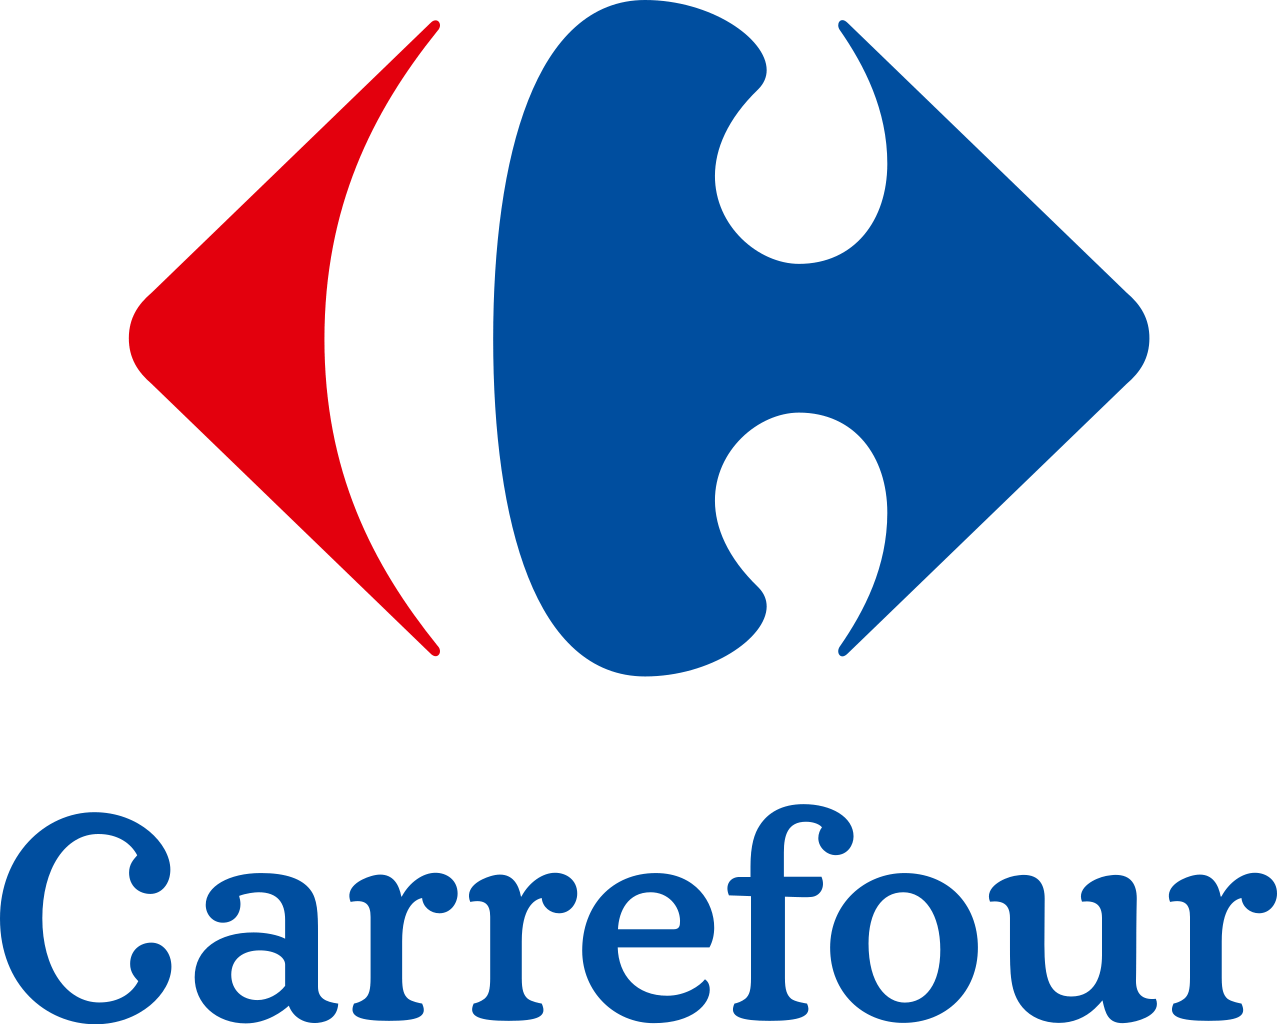 Carrefoursa